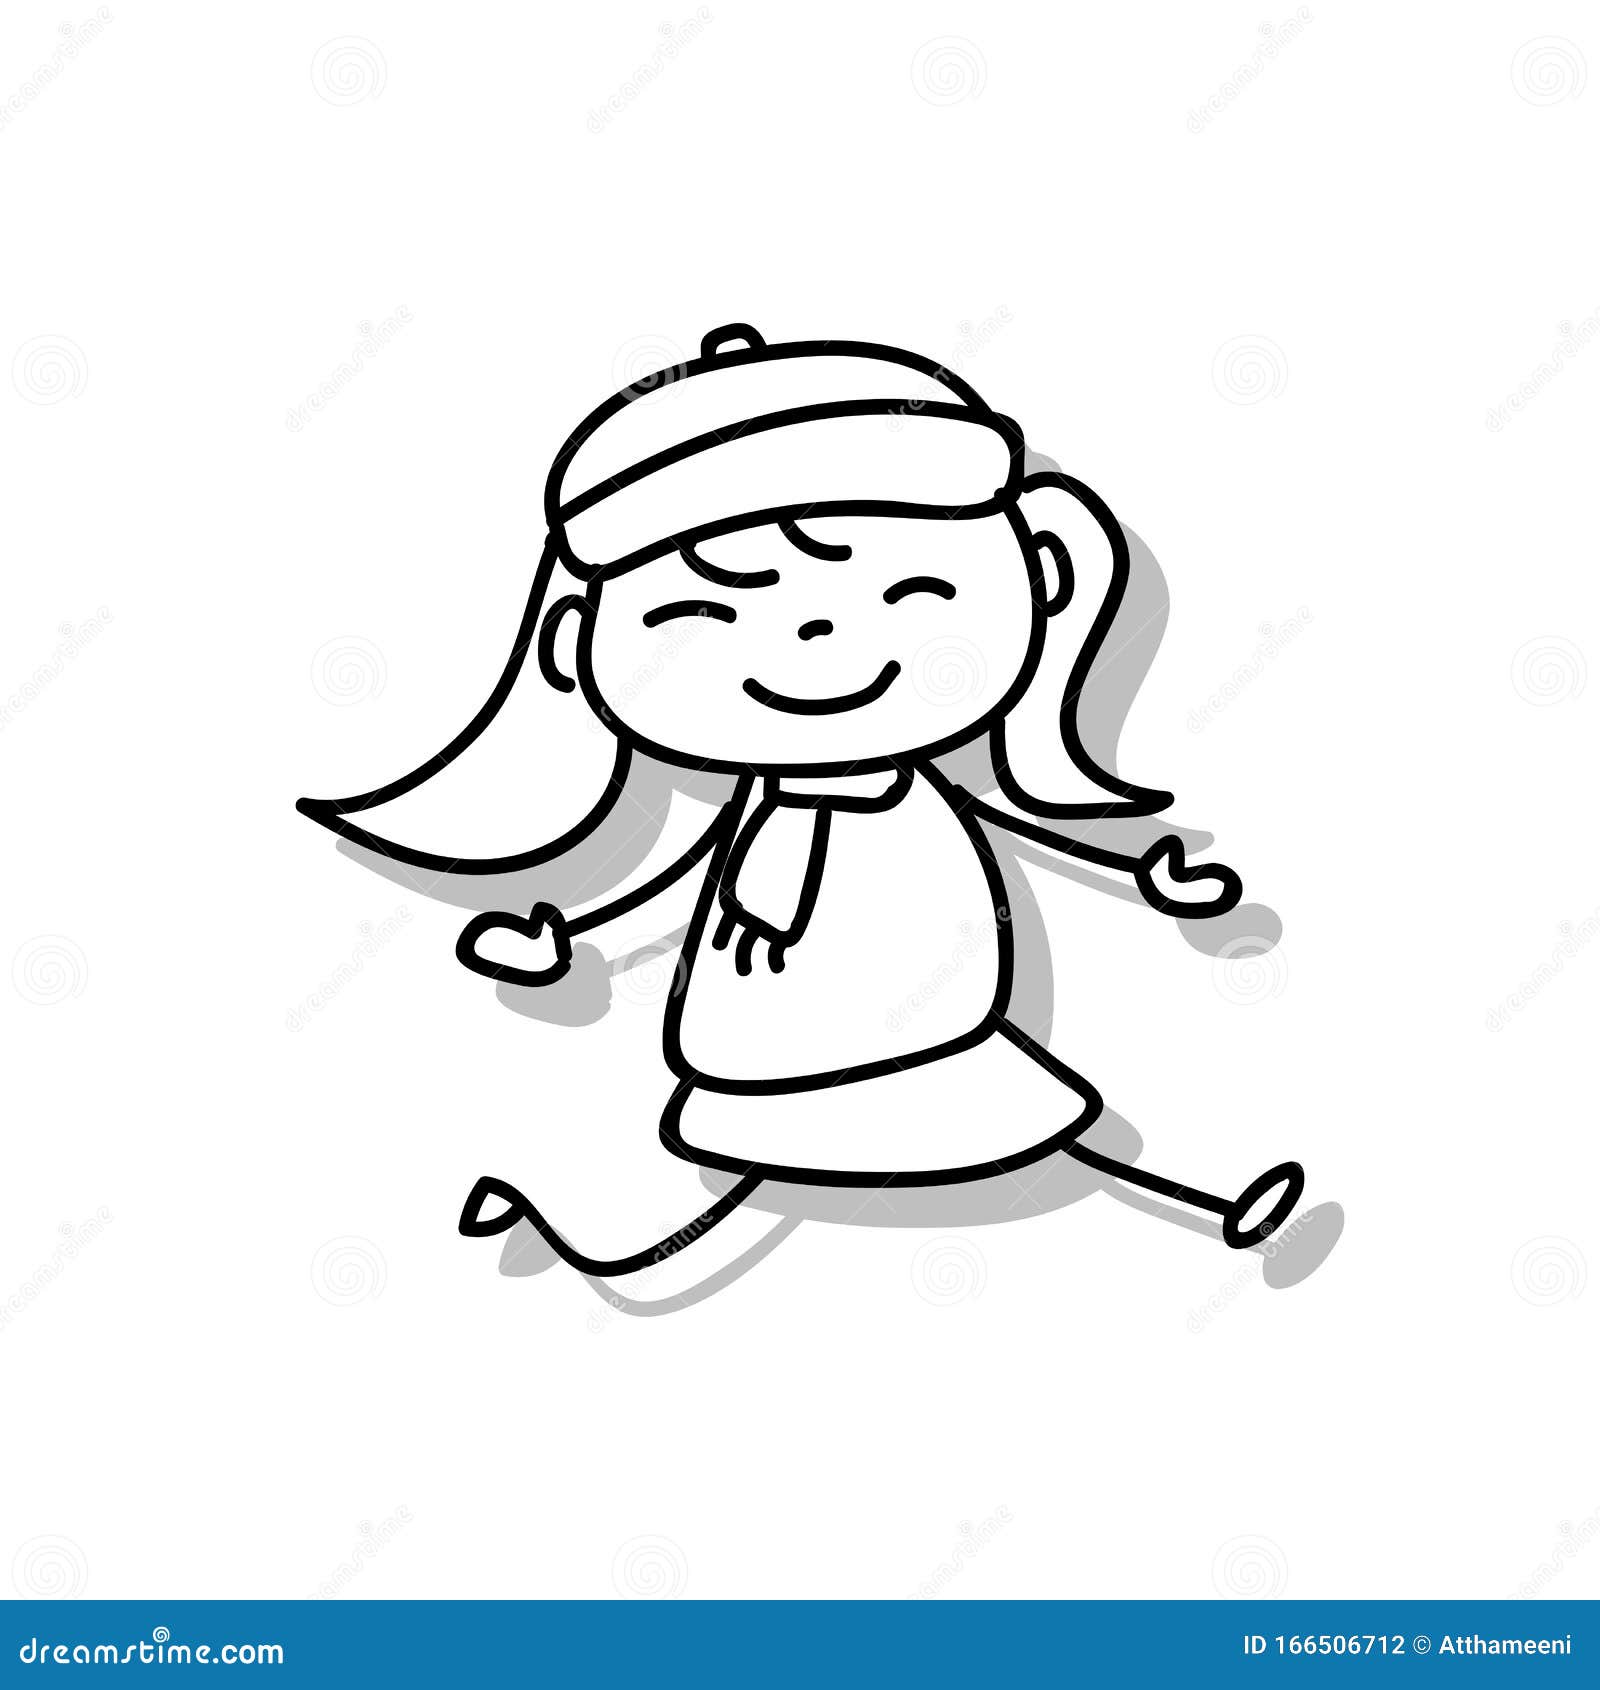 Premium Vector  Cute happy cartoon doodle girl kids, child drawing sketch,  children character isolated vector